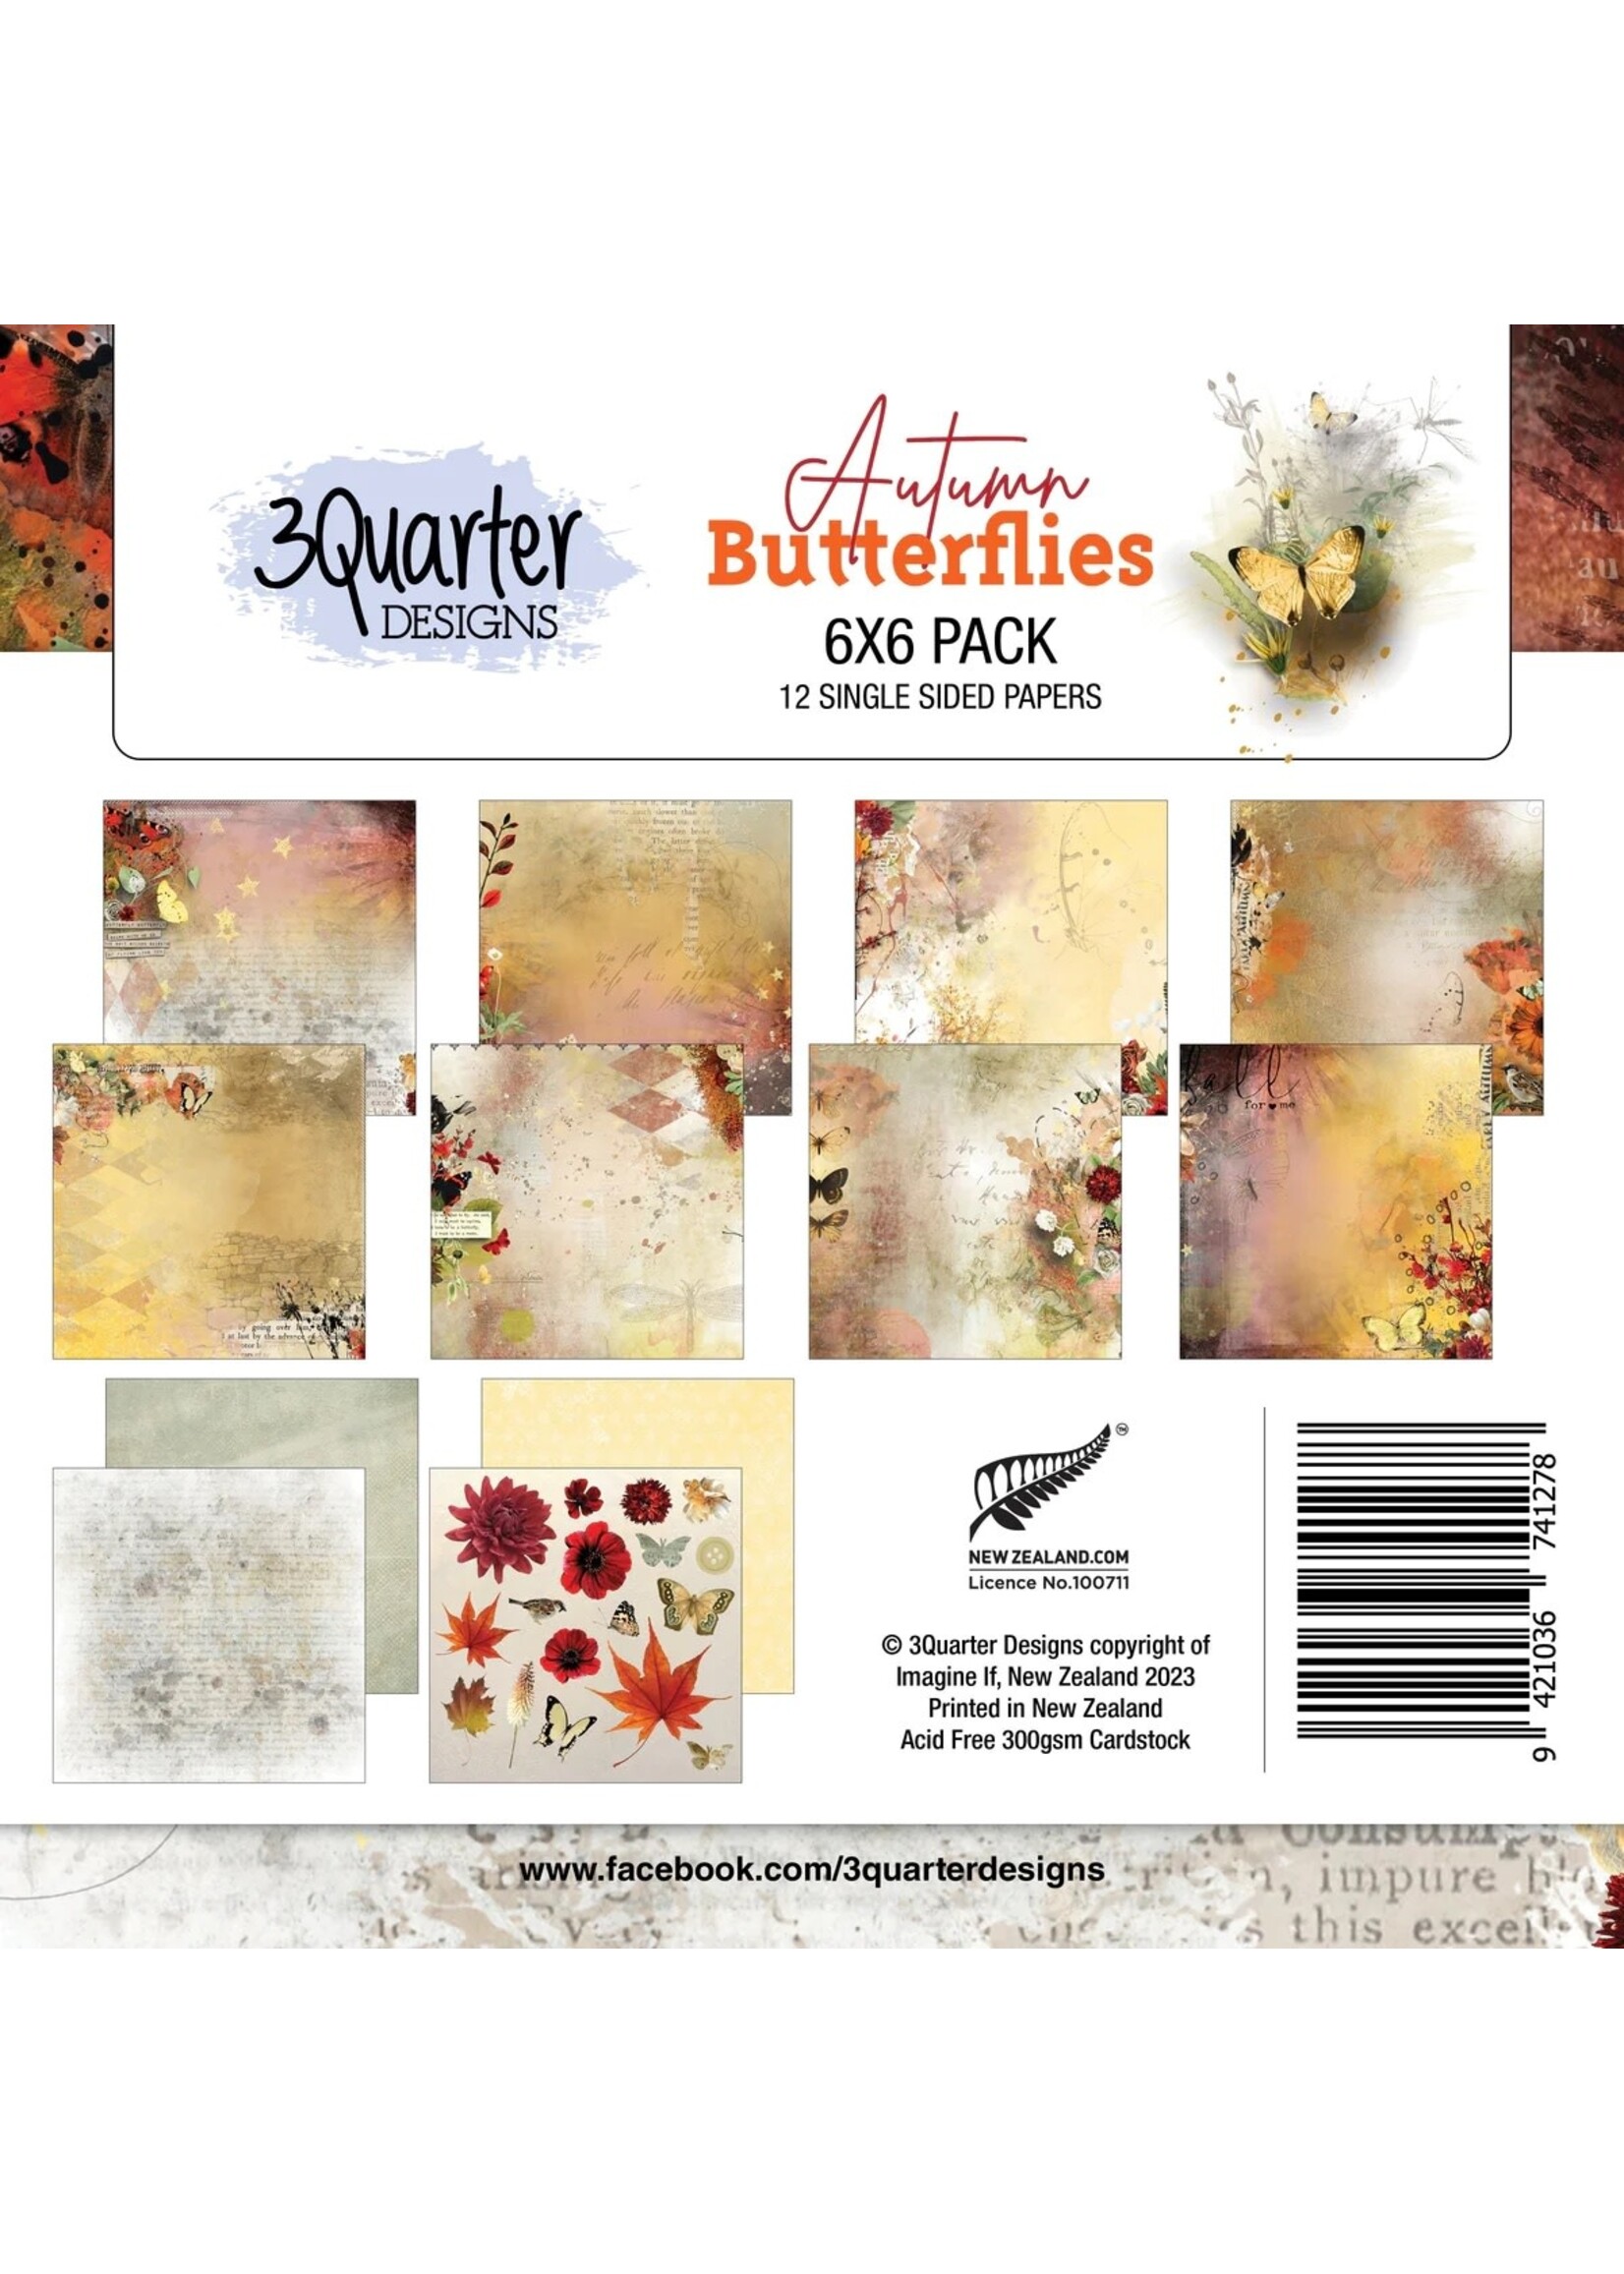 3Quarter Designs Autumn Butterflies 6x6 paper Pad